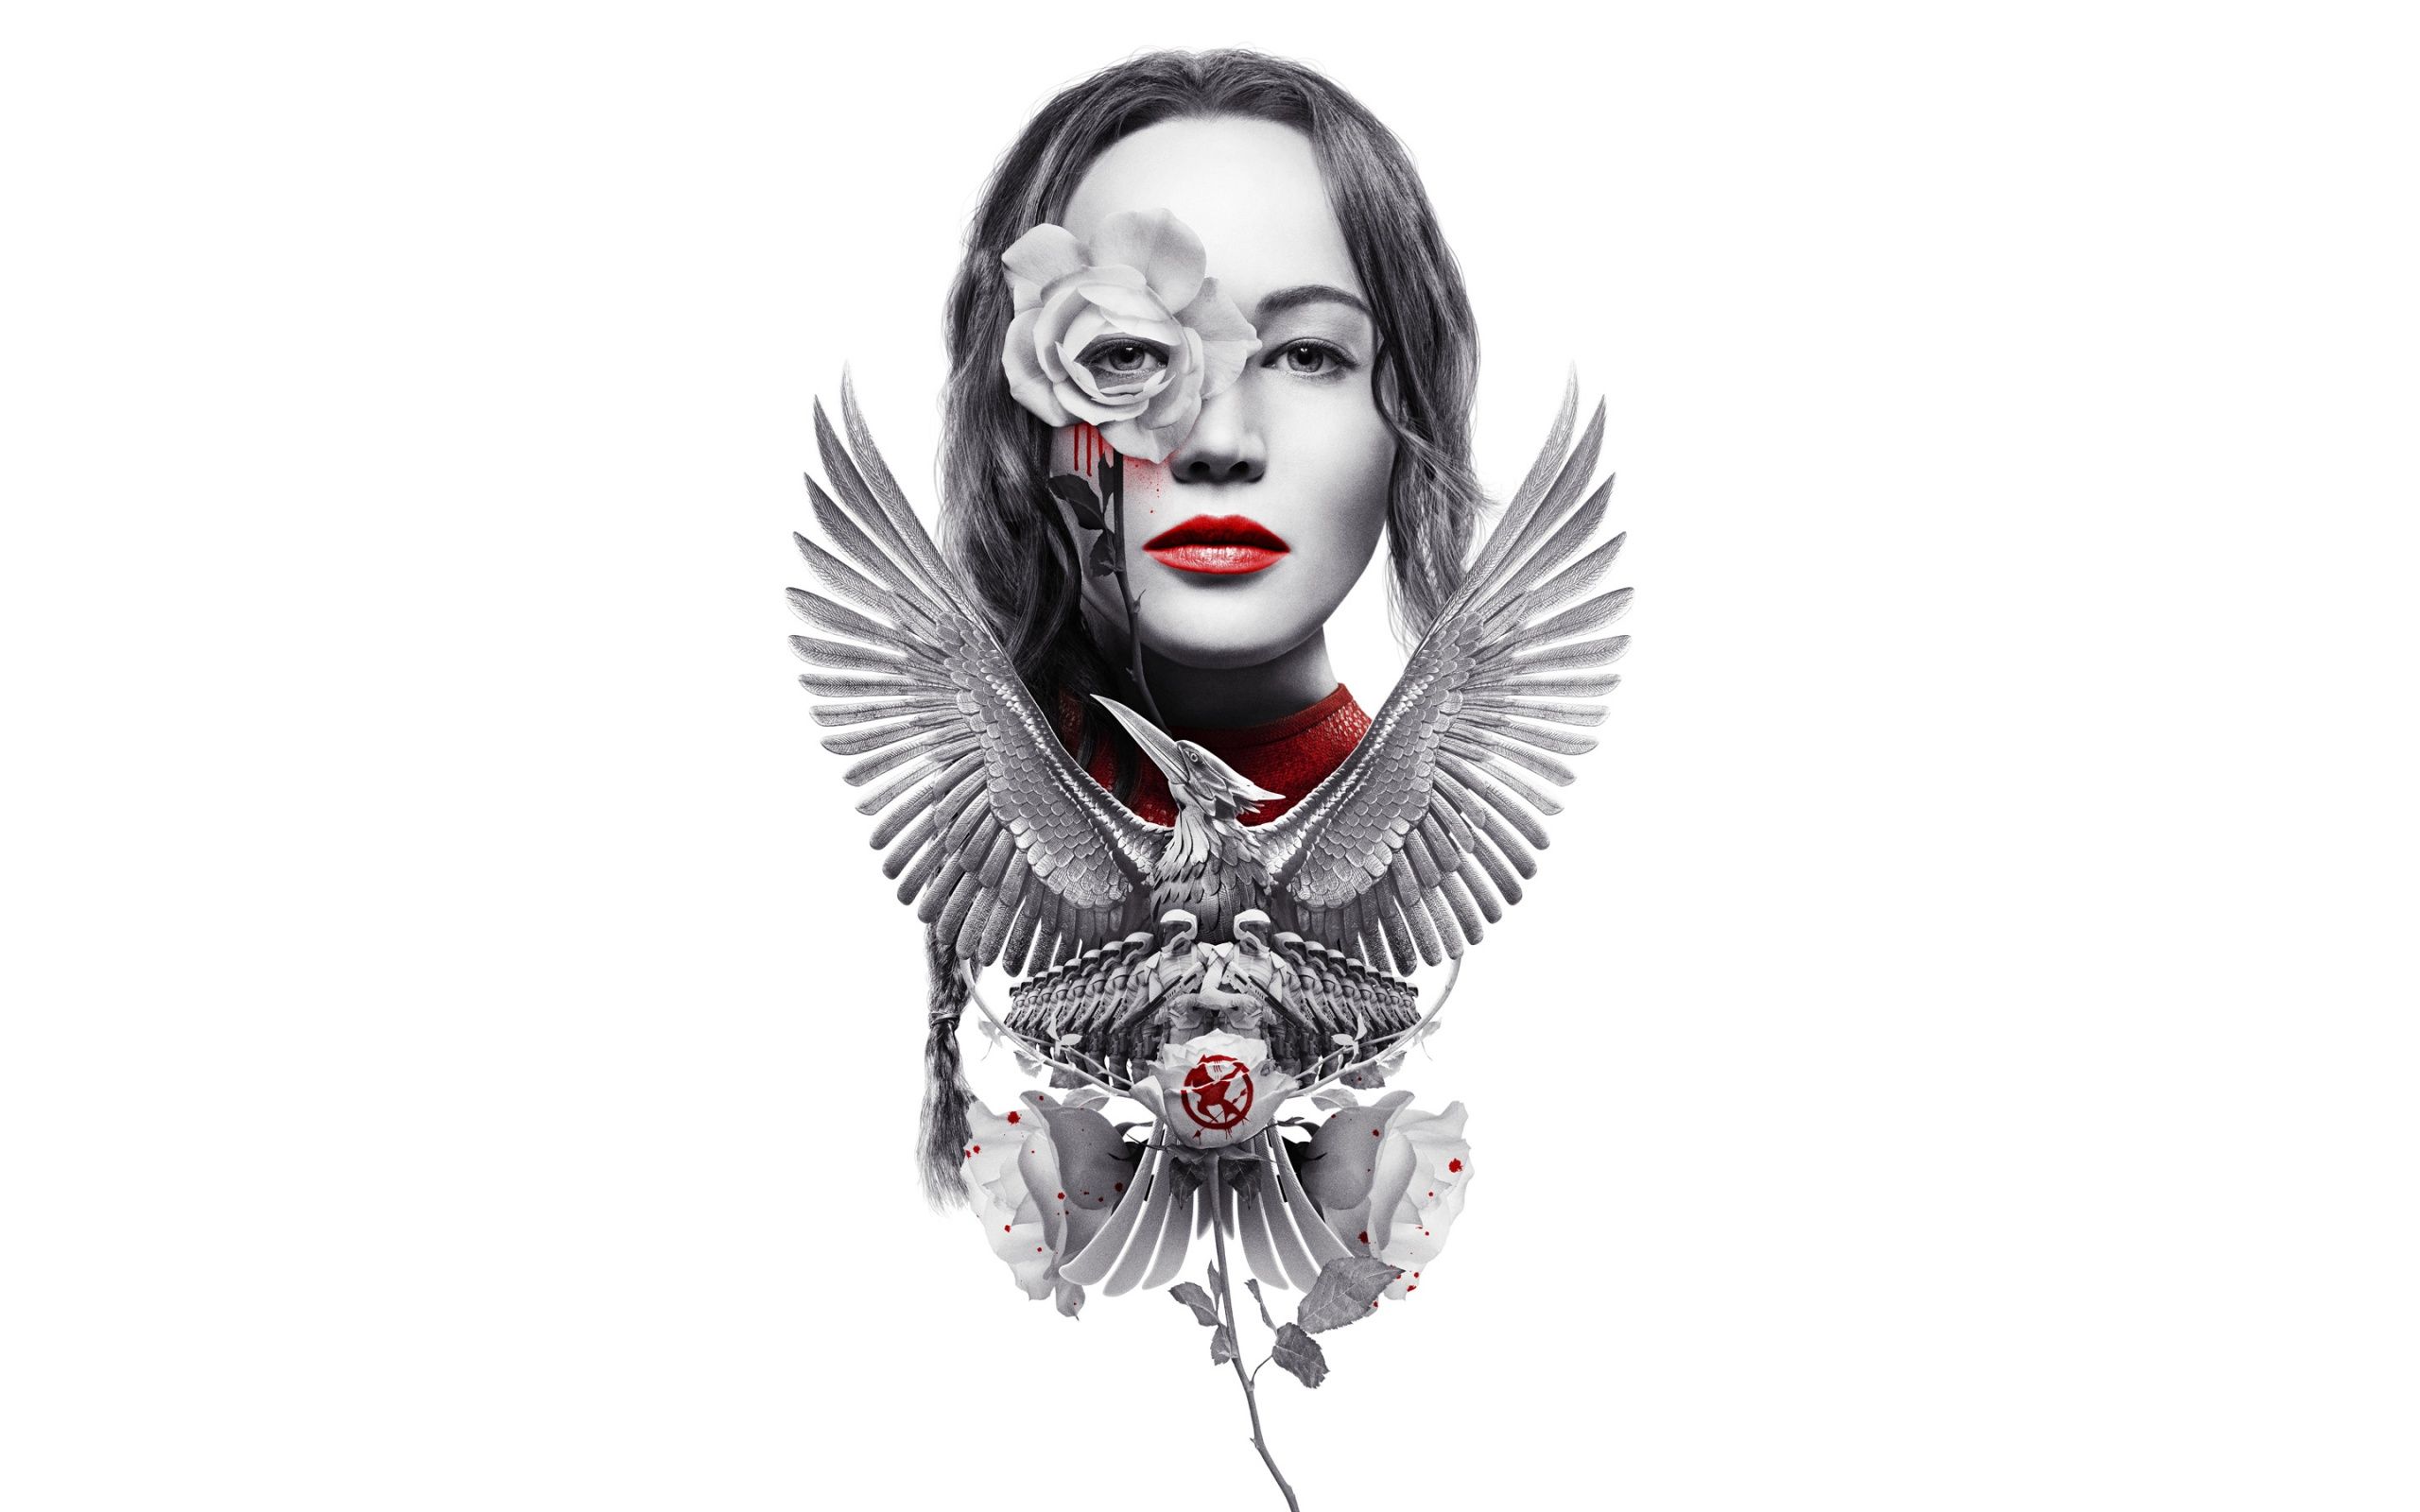 The Hunger Games Katniss Everdeen Wallpaper in jpg format for free download